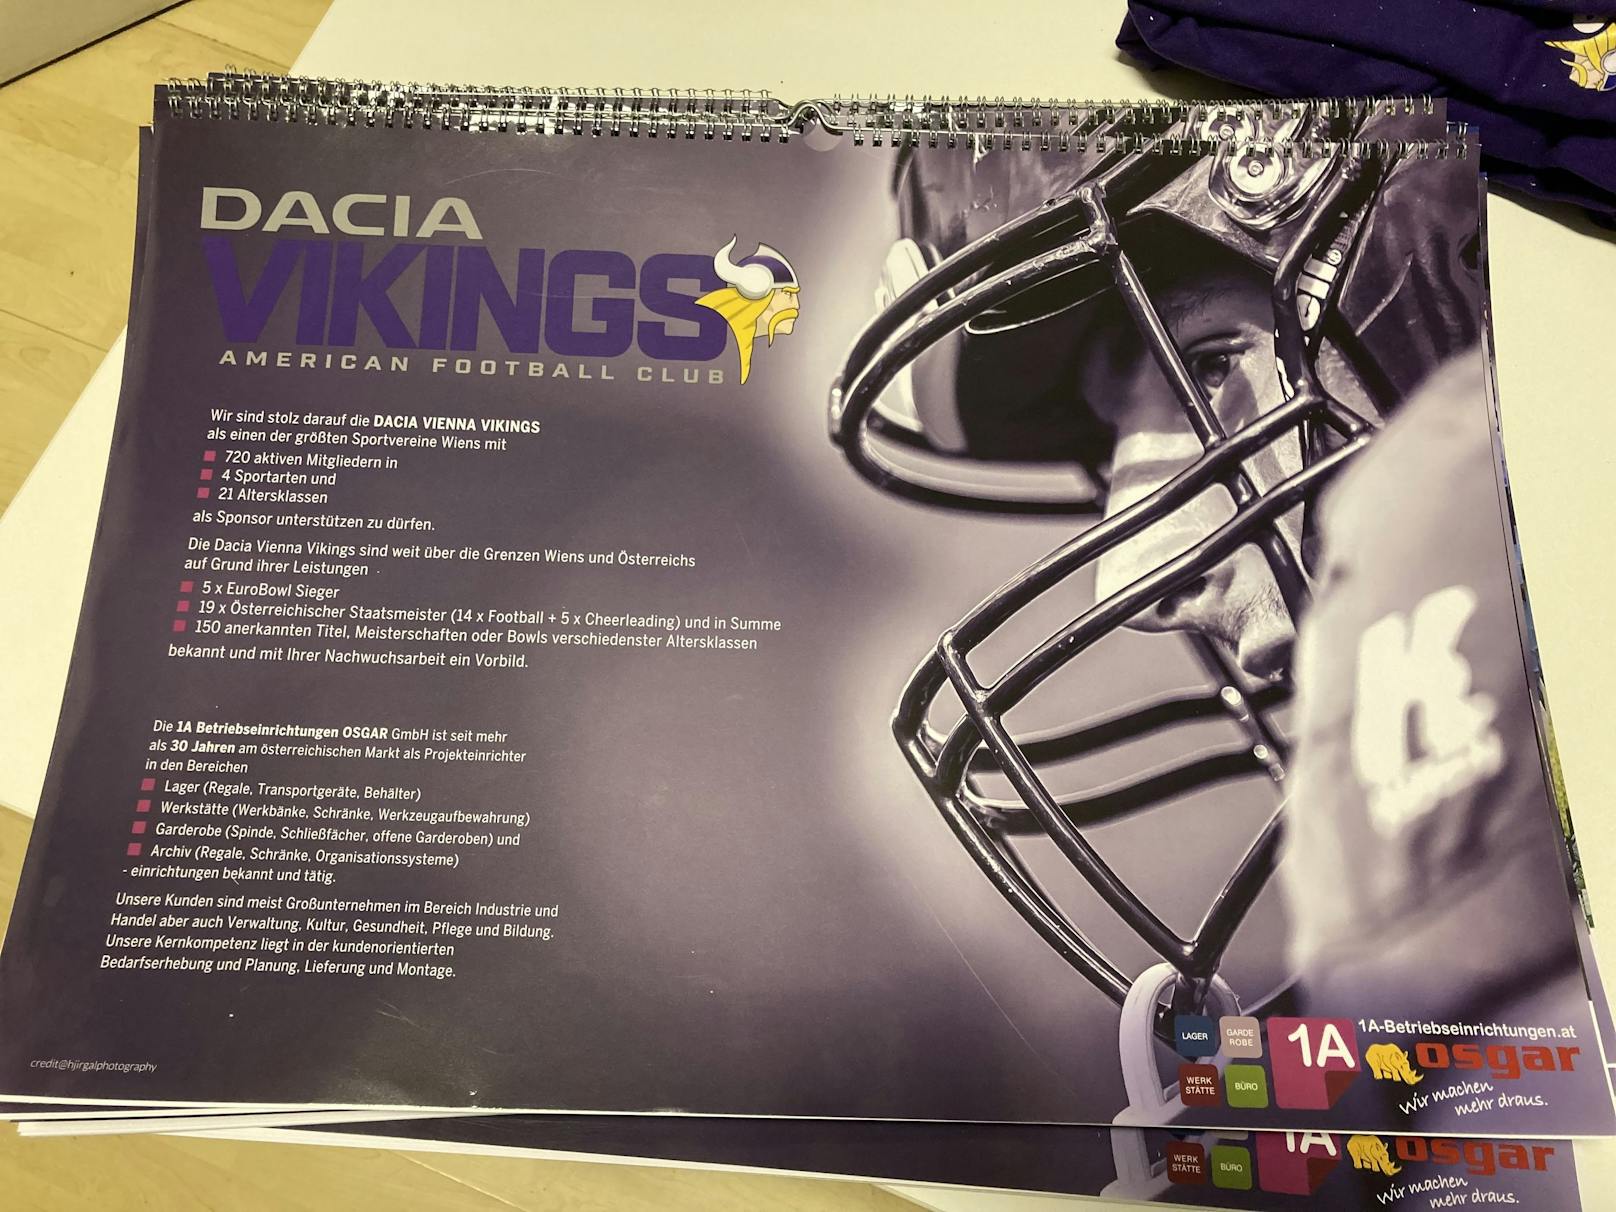 Hochglanz-Kalender "2021 Dacia Vikings Saisonkalender"